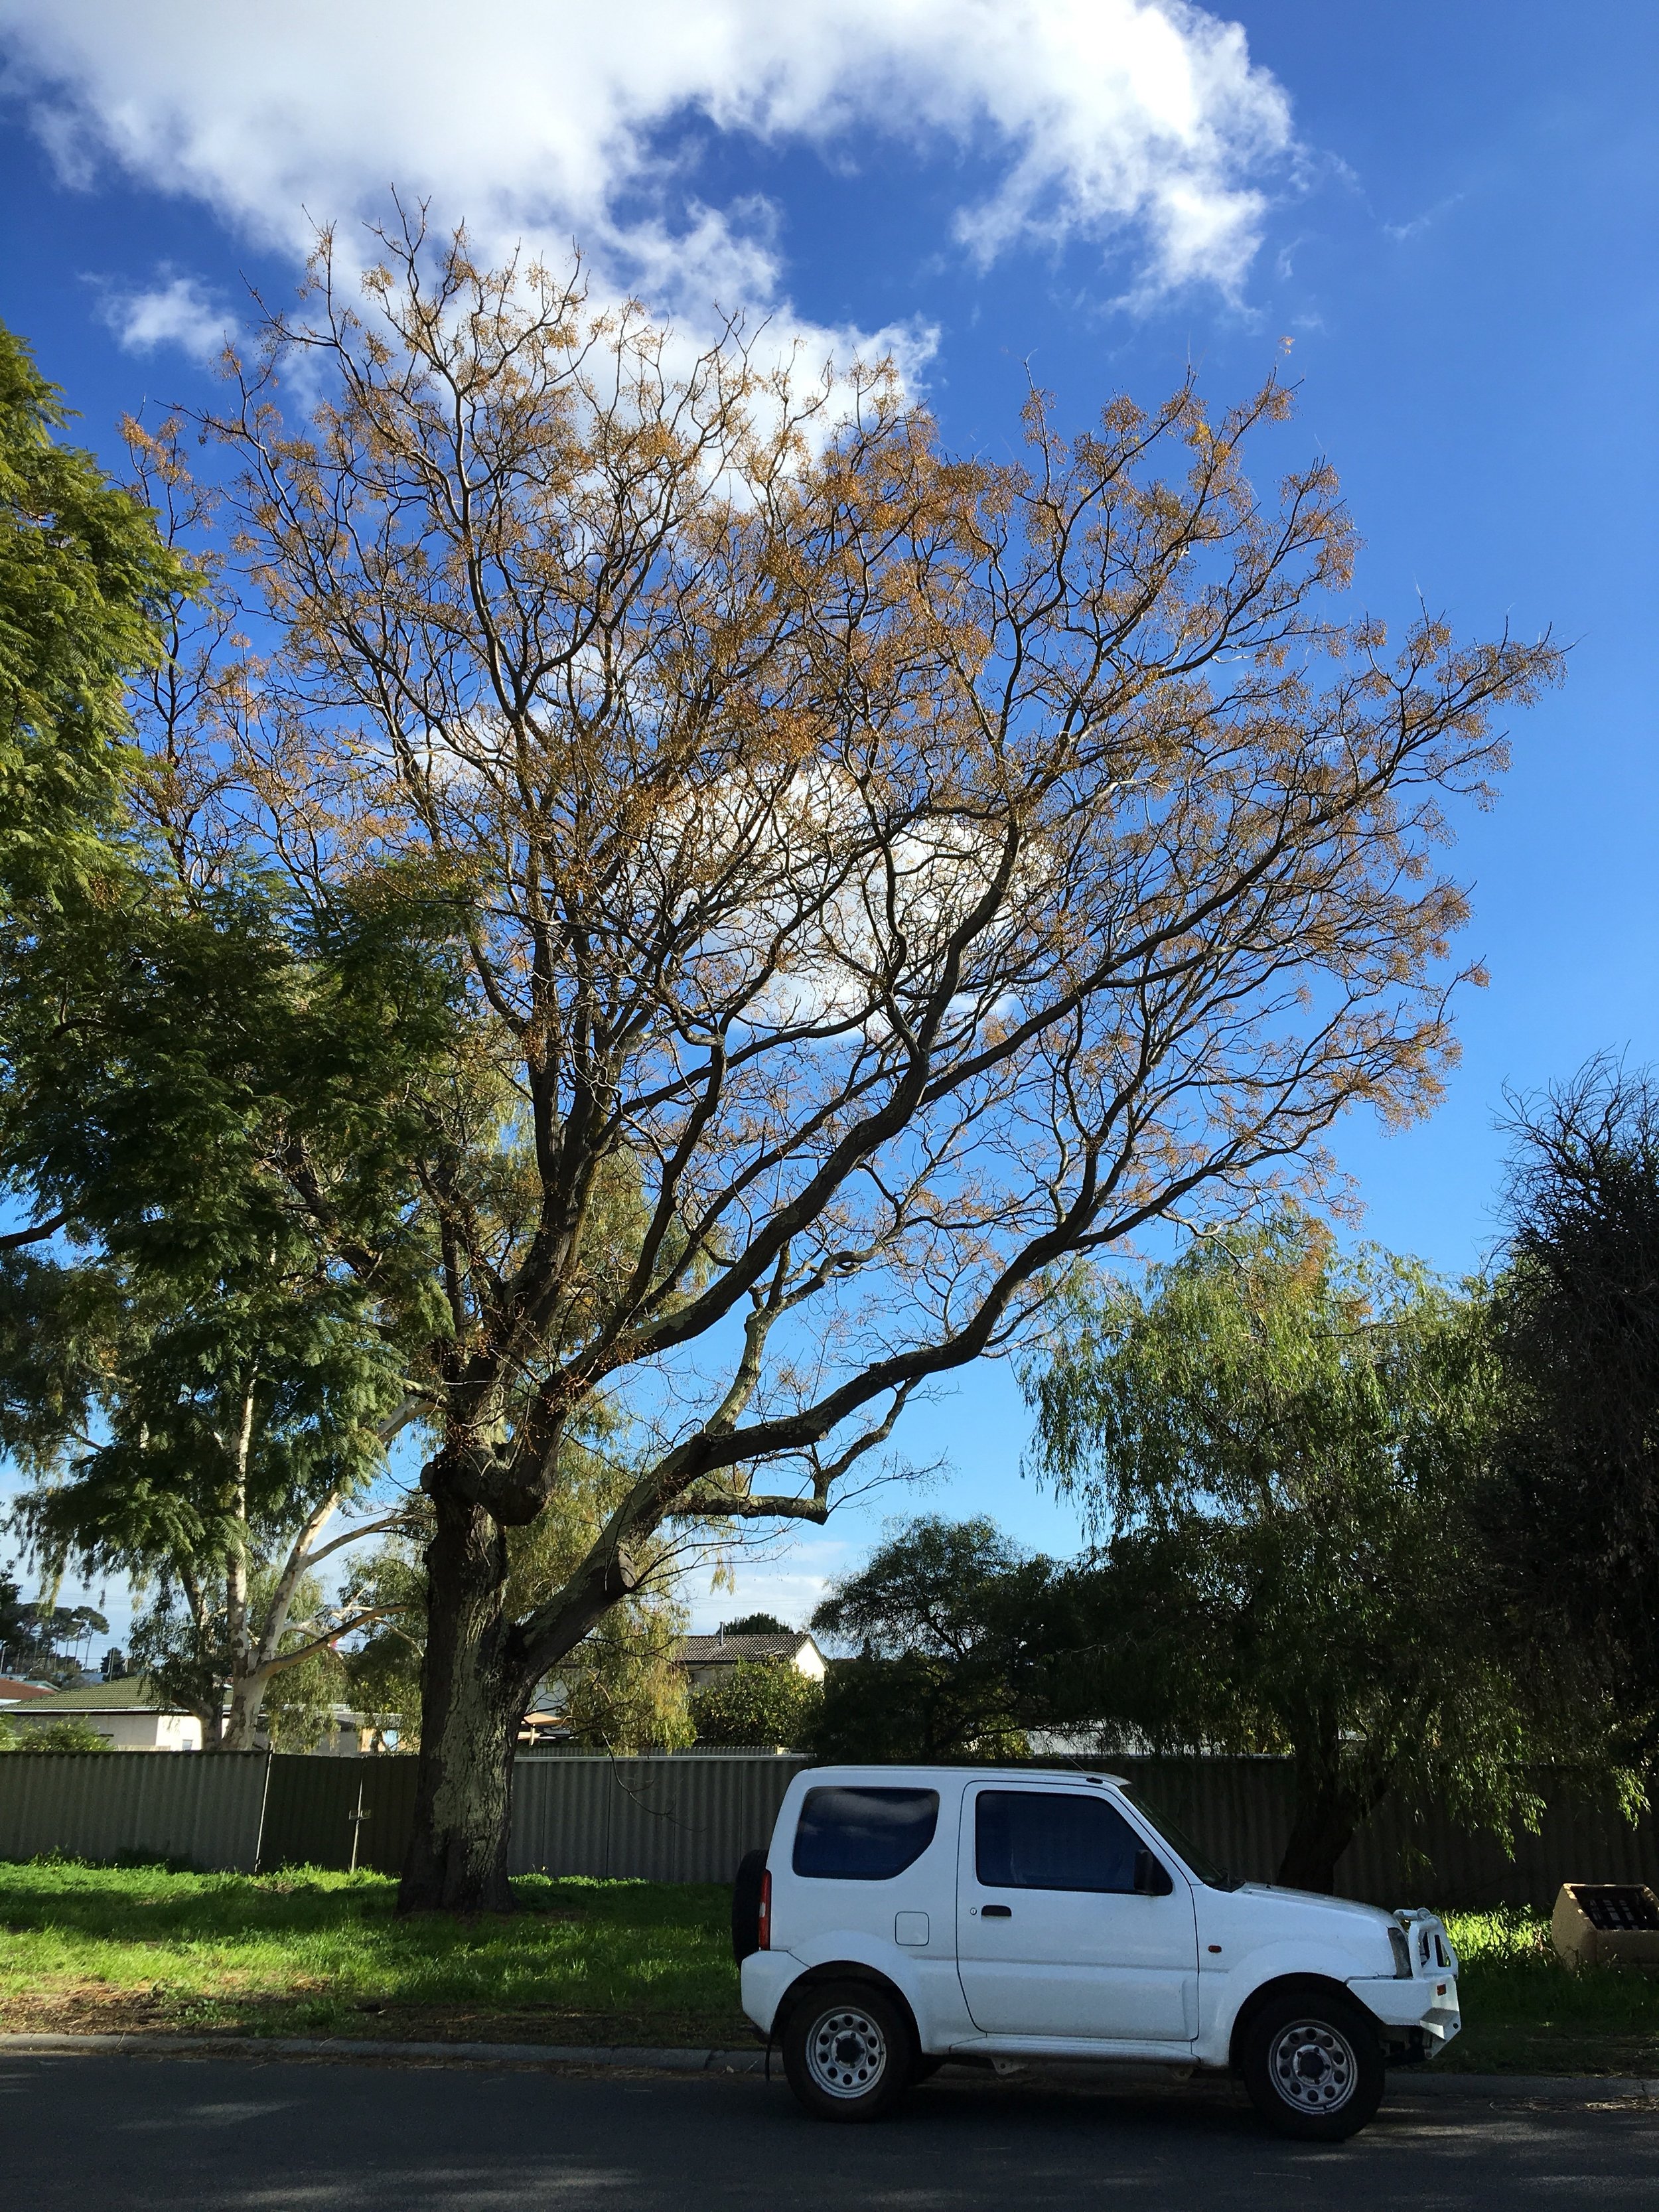 Cape lilac (Melia azedarach) tree in a backyard in Kardinya, a suburb of Perth.